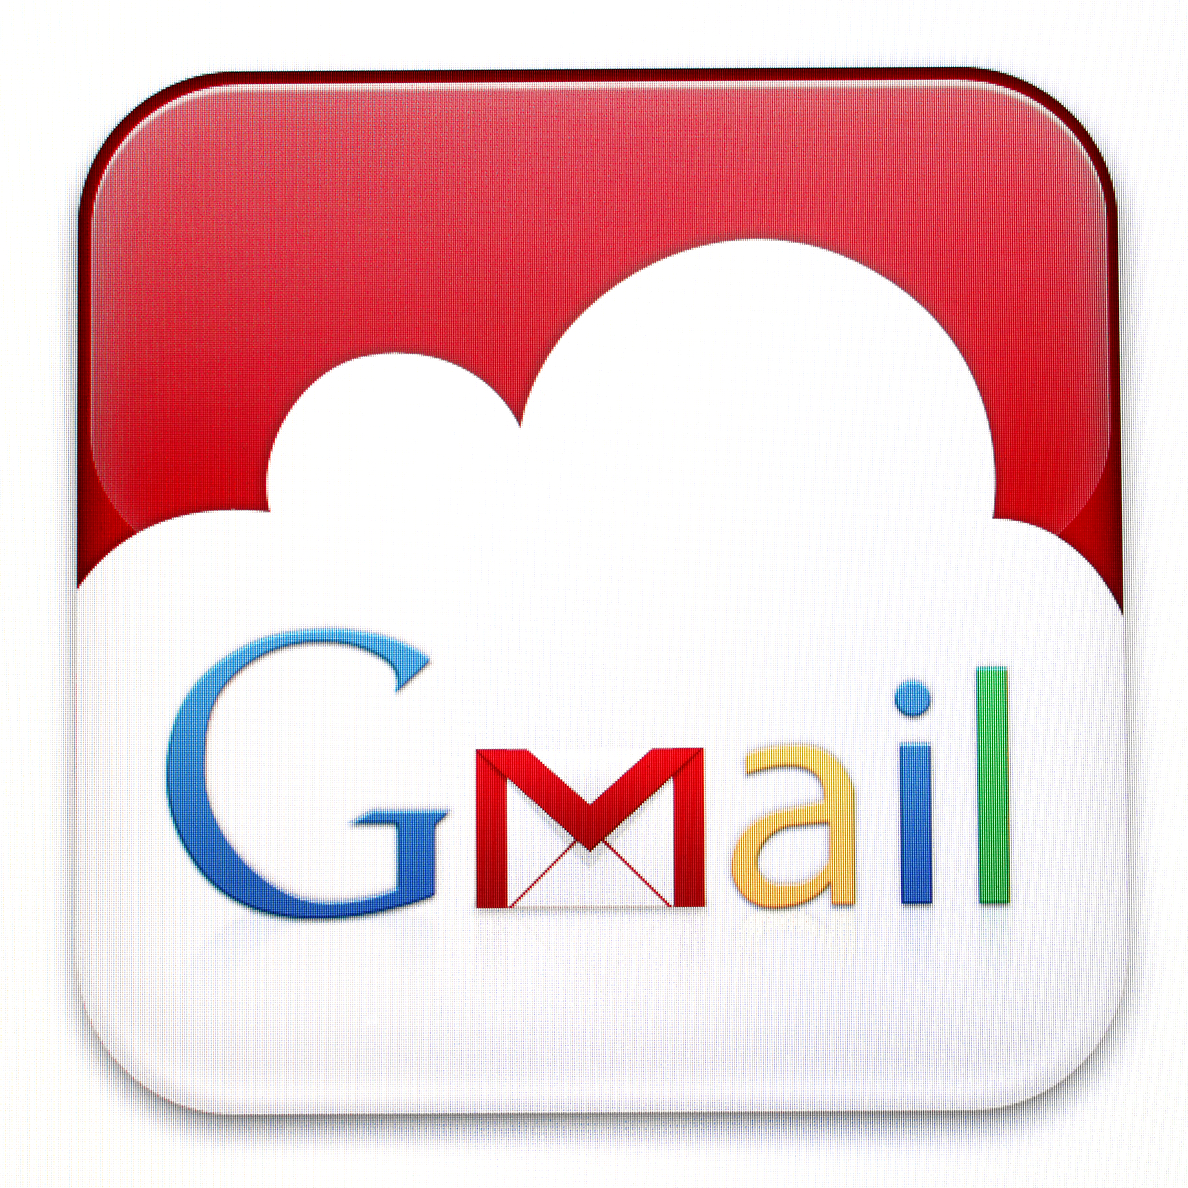 16 gmail com. Gmail лого. Gmail картинка. Gmail логотип PNG.